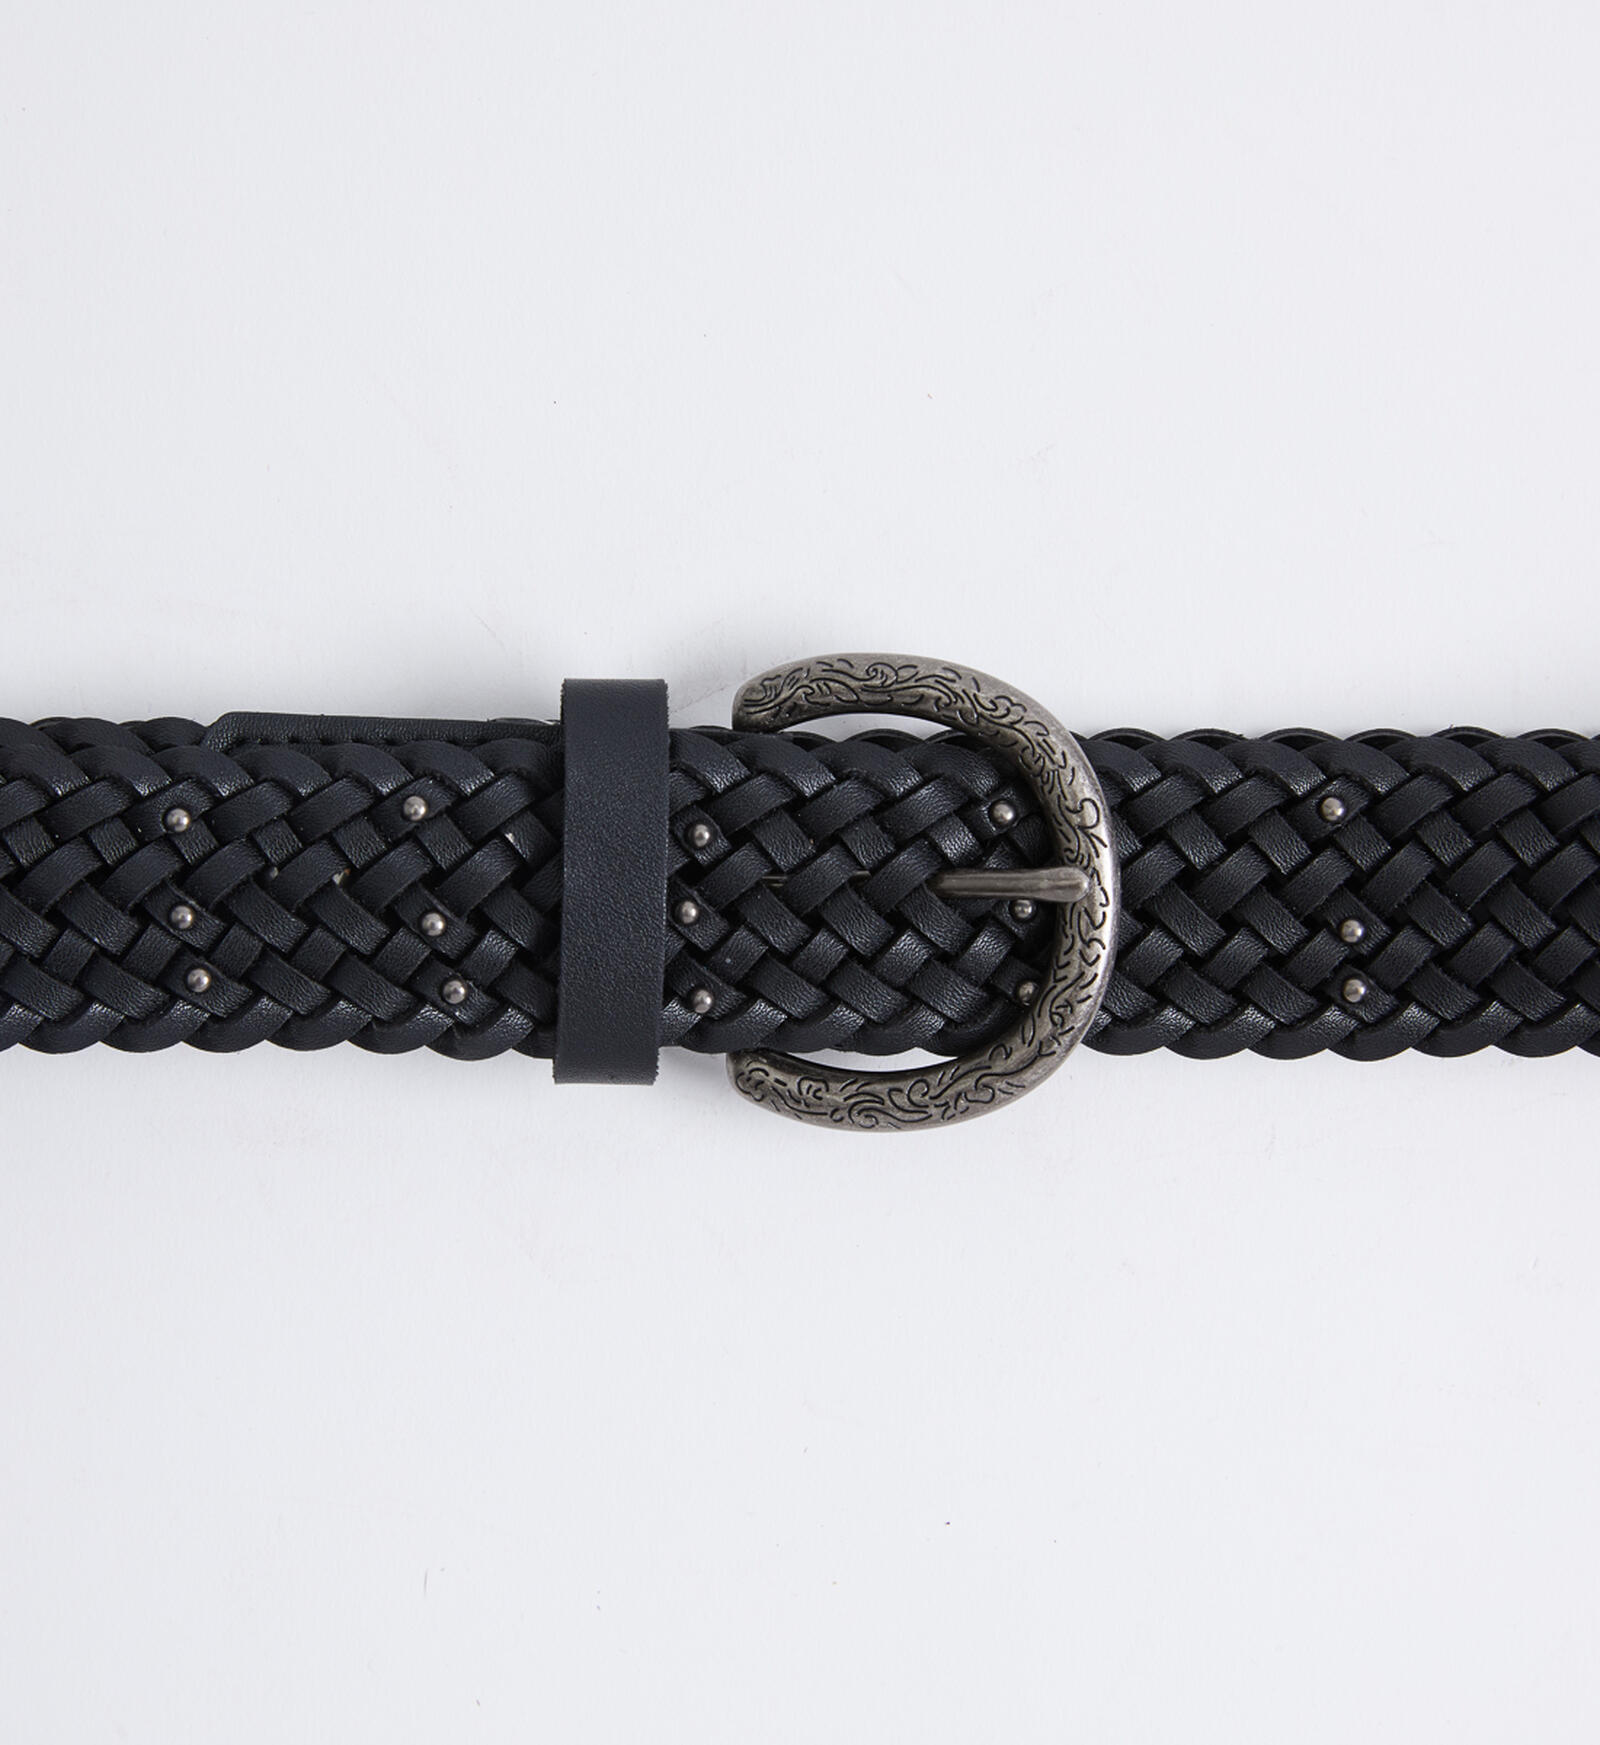 Talbots Braided Leather Belt Black & Brown Womens Size M Adjustable